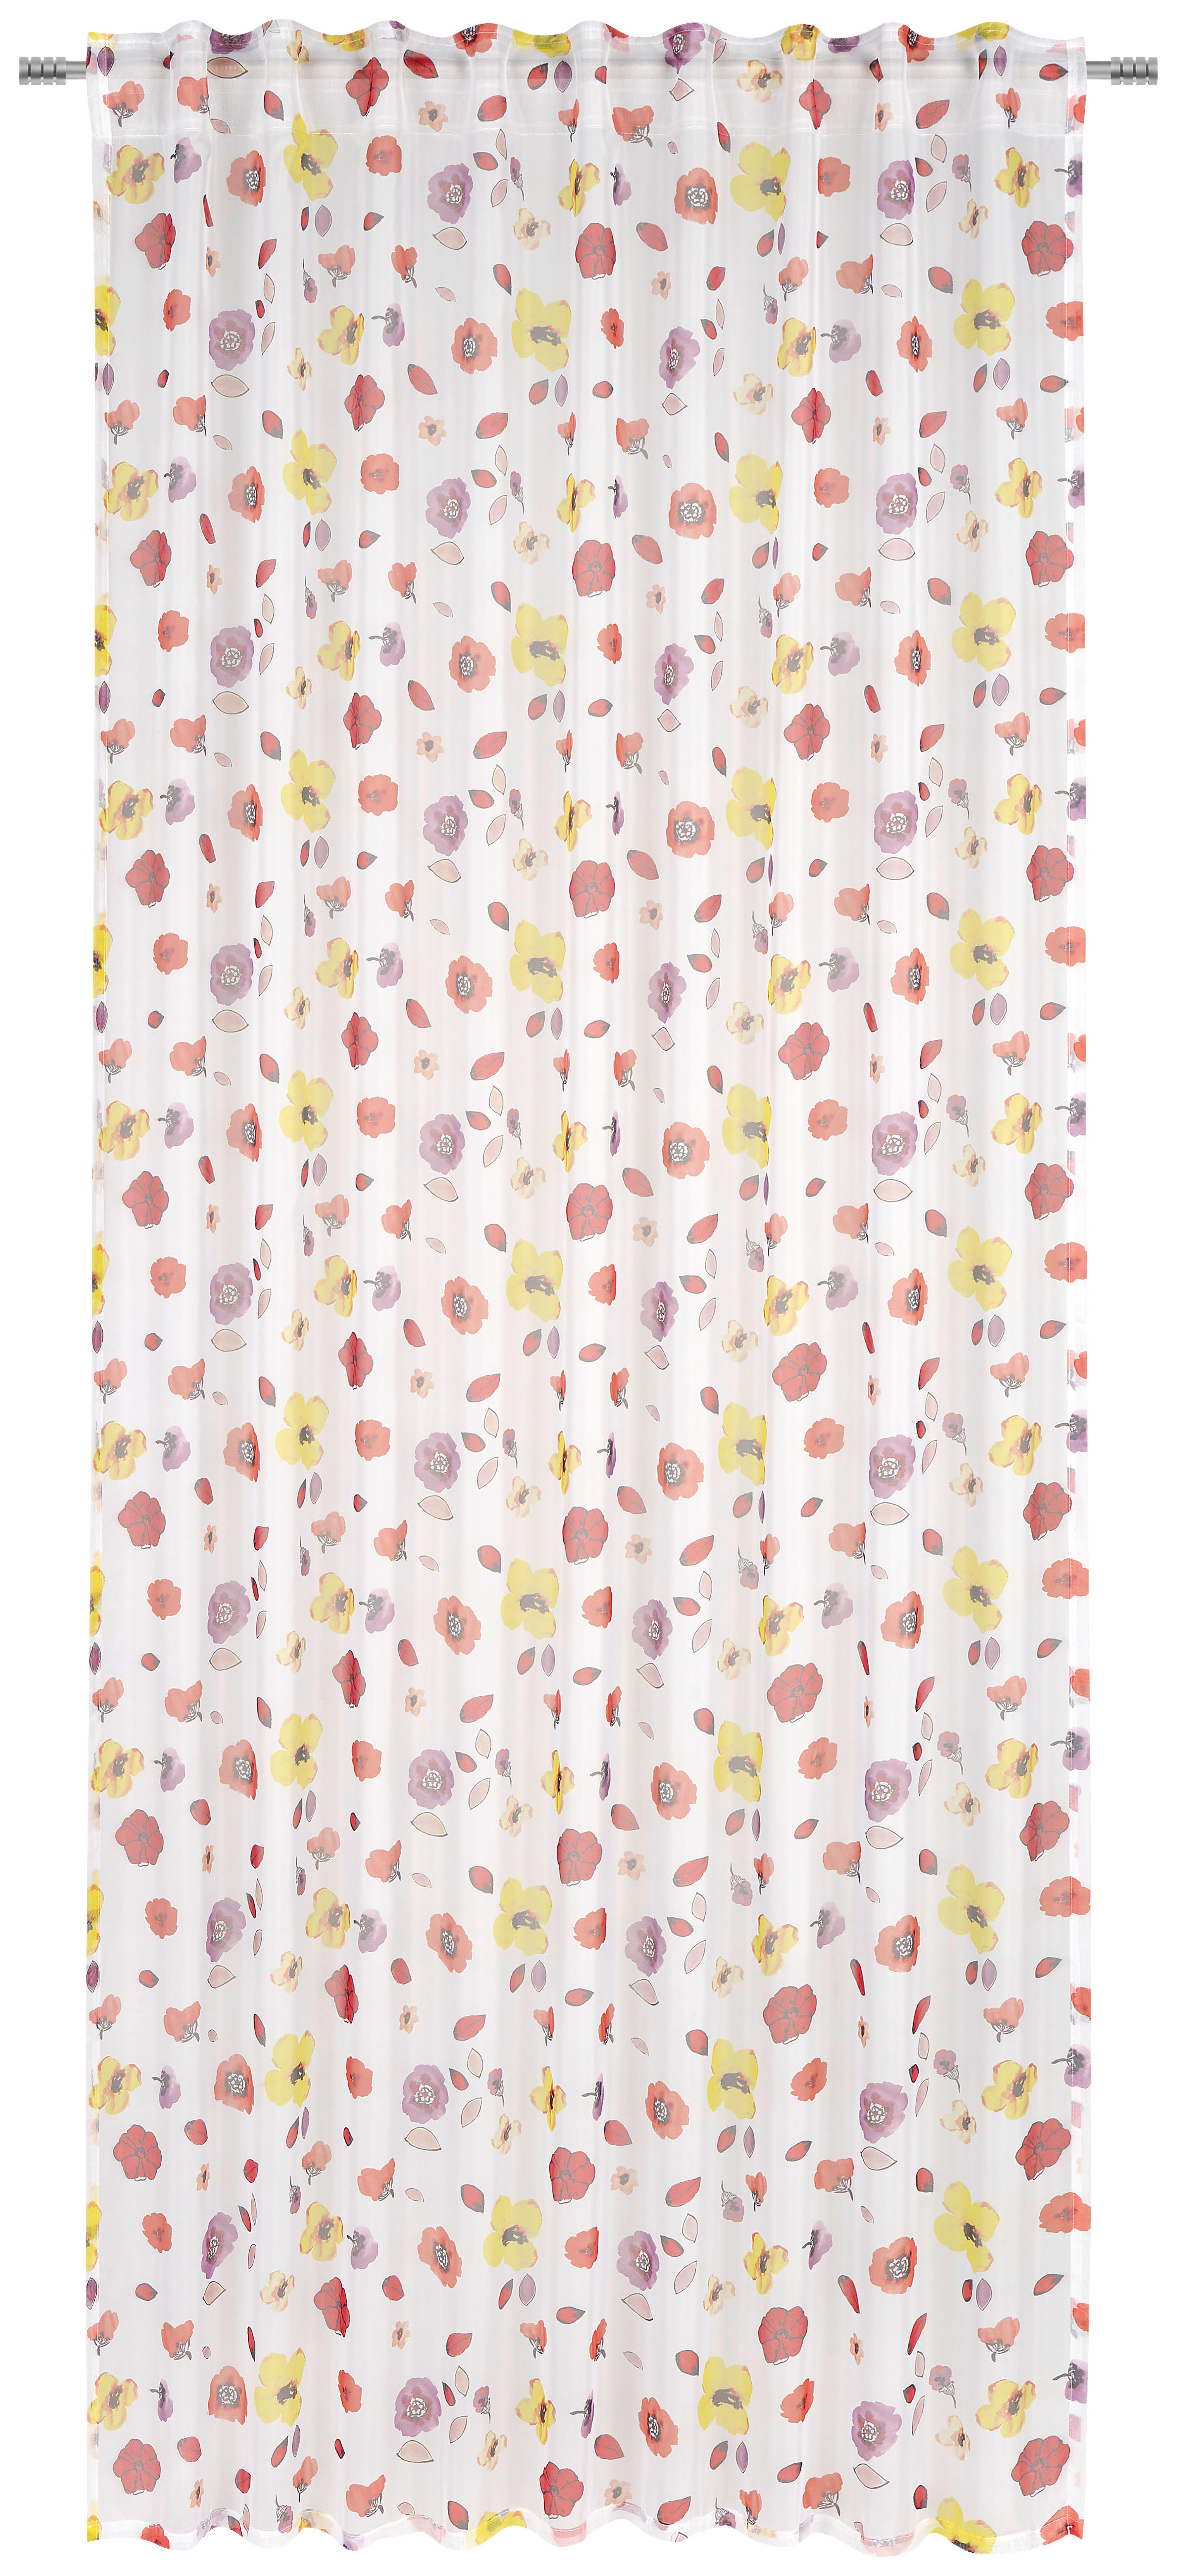 FERTIGVORHANG CASTELLANA transparent 135/245 cm   - Multicolor/Weiß, Basics, Textil (135/245cm) - Esposa